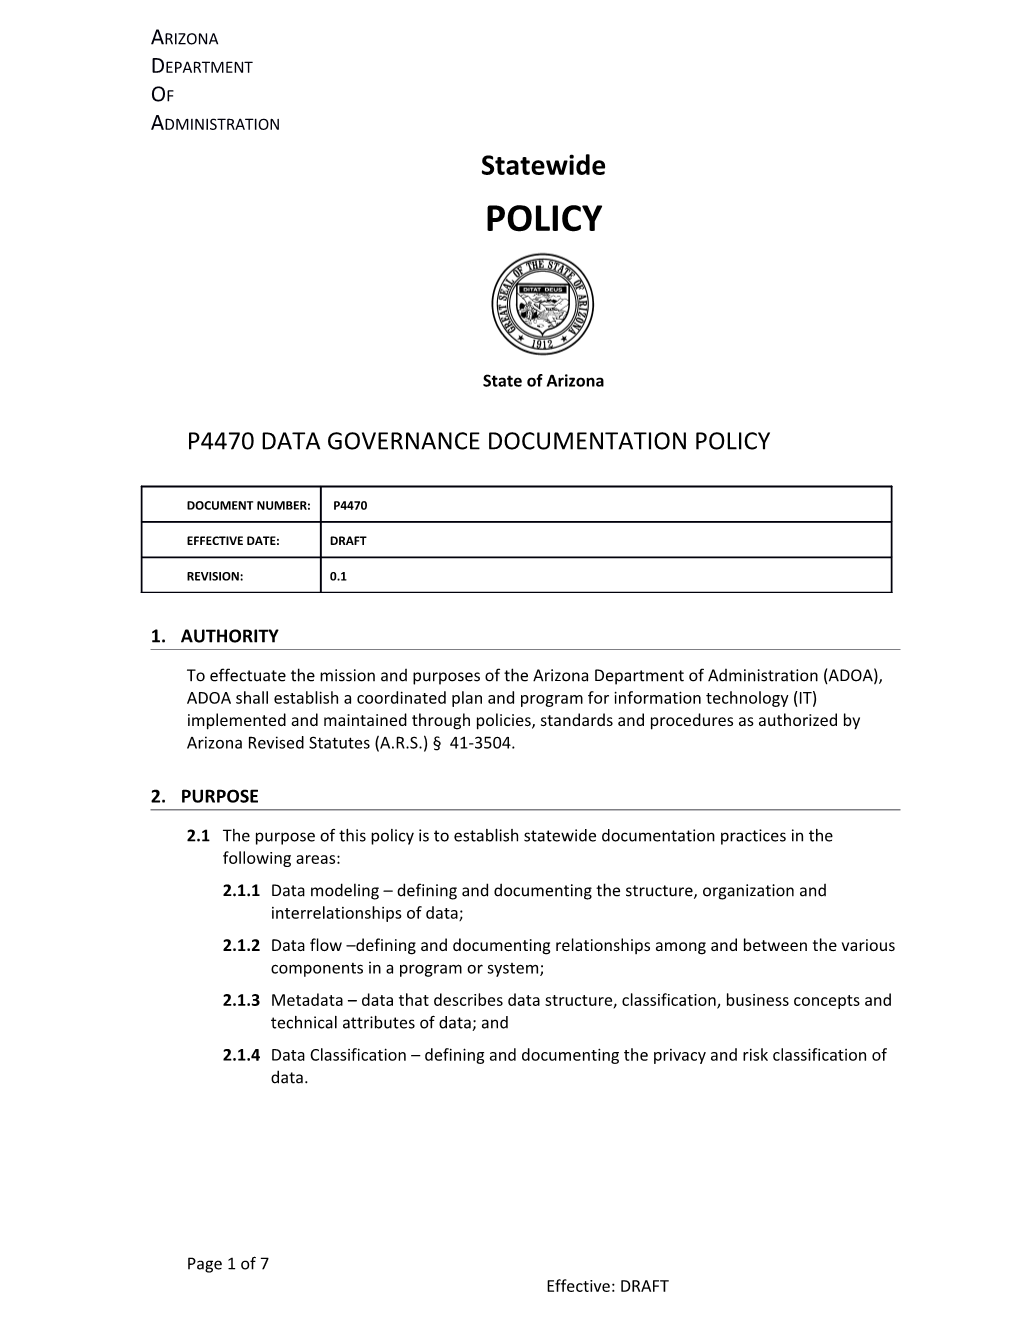 P7470 Data Governance Documentation Policy